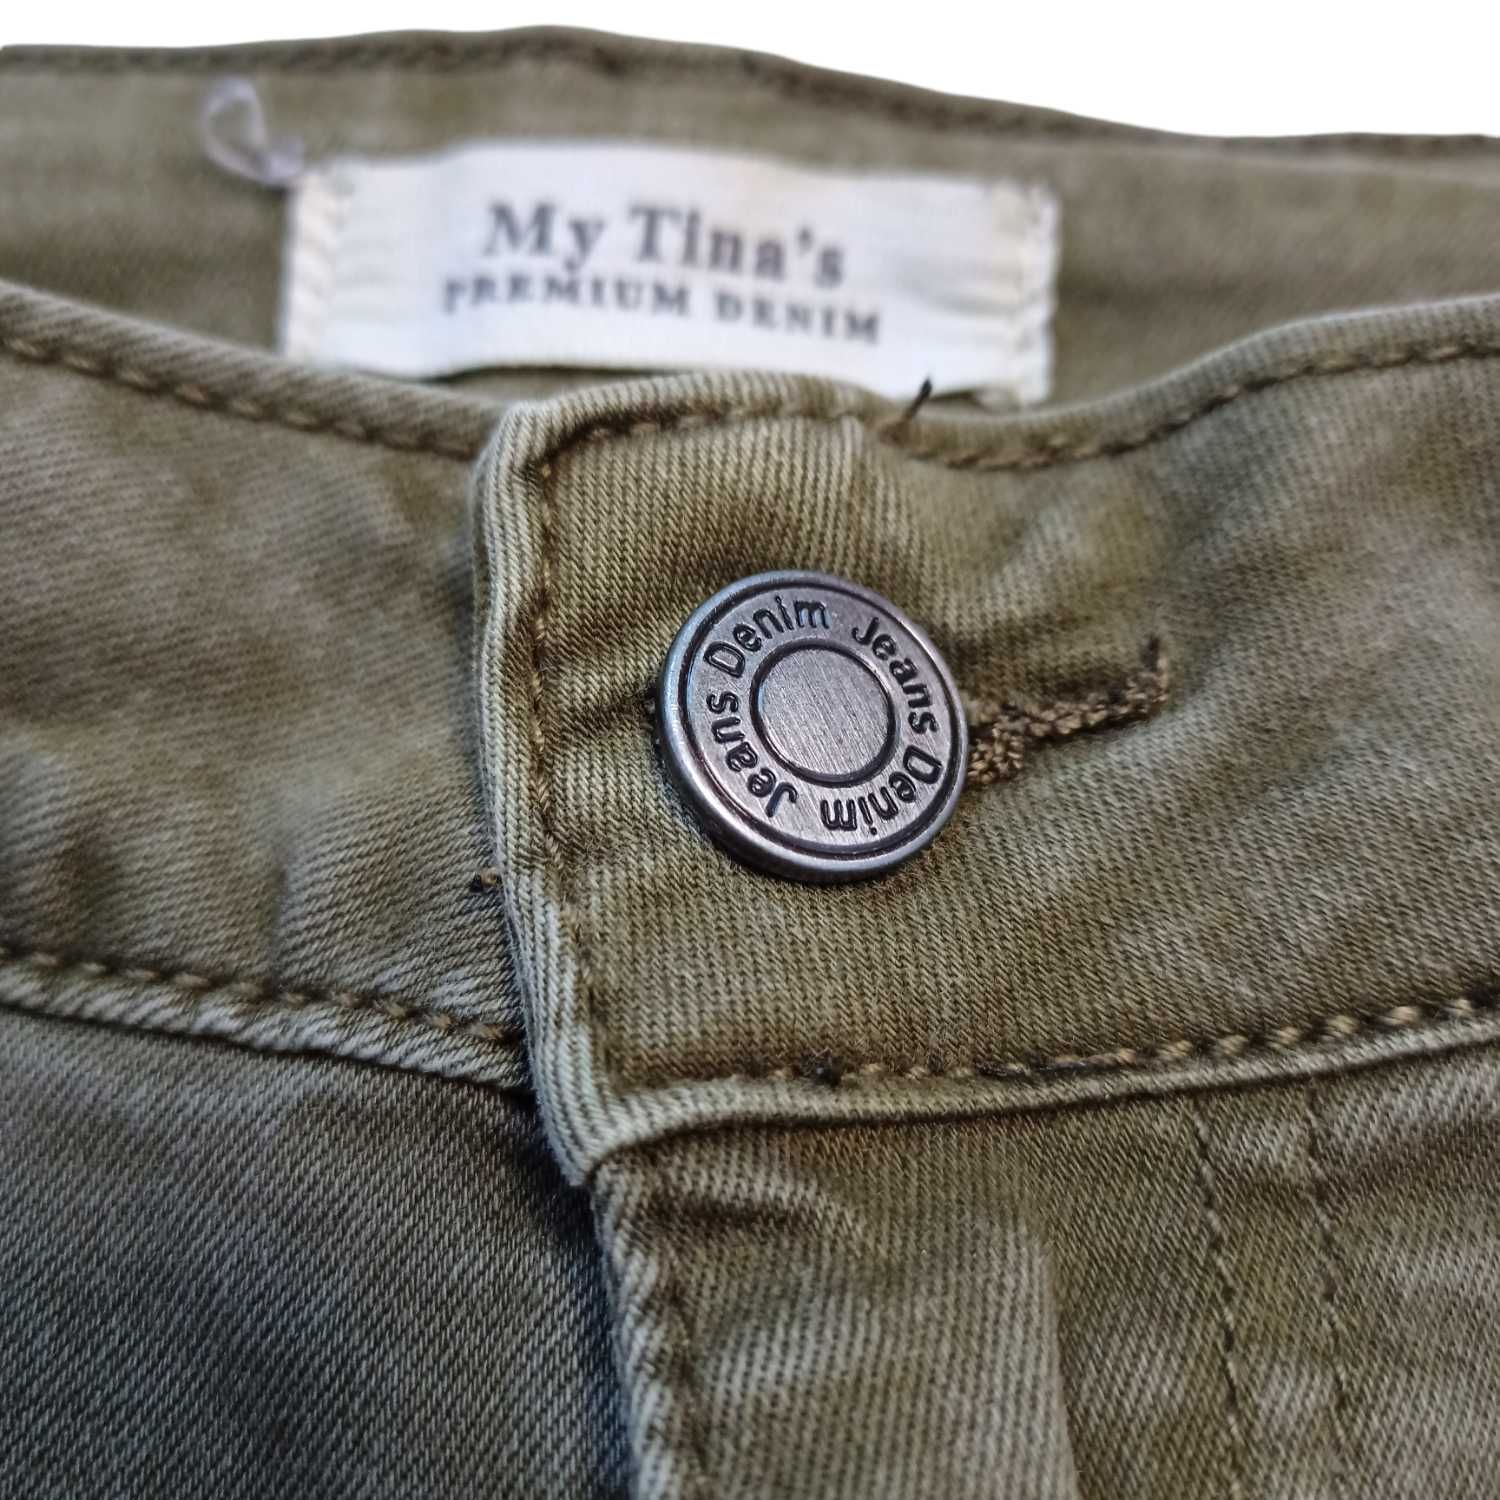 Жіночі карго штани My Tina's Premium Denim джинси Tinas